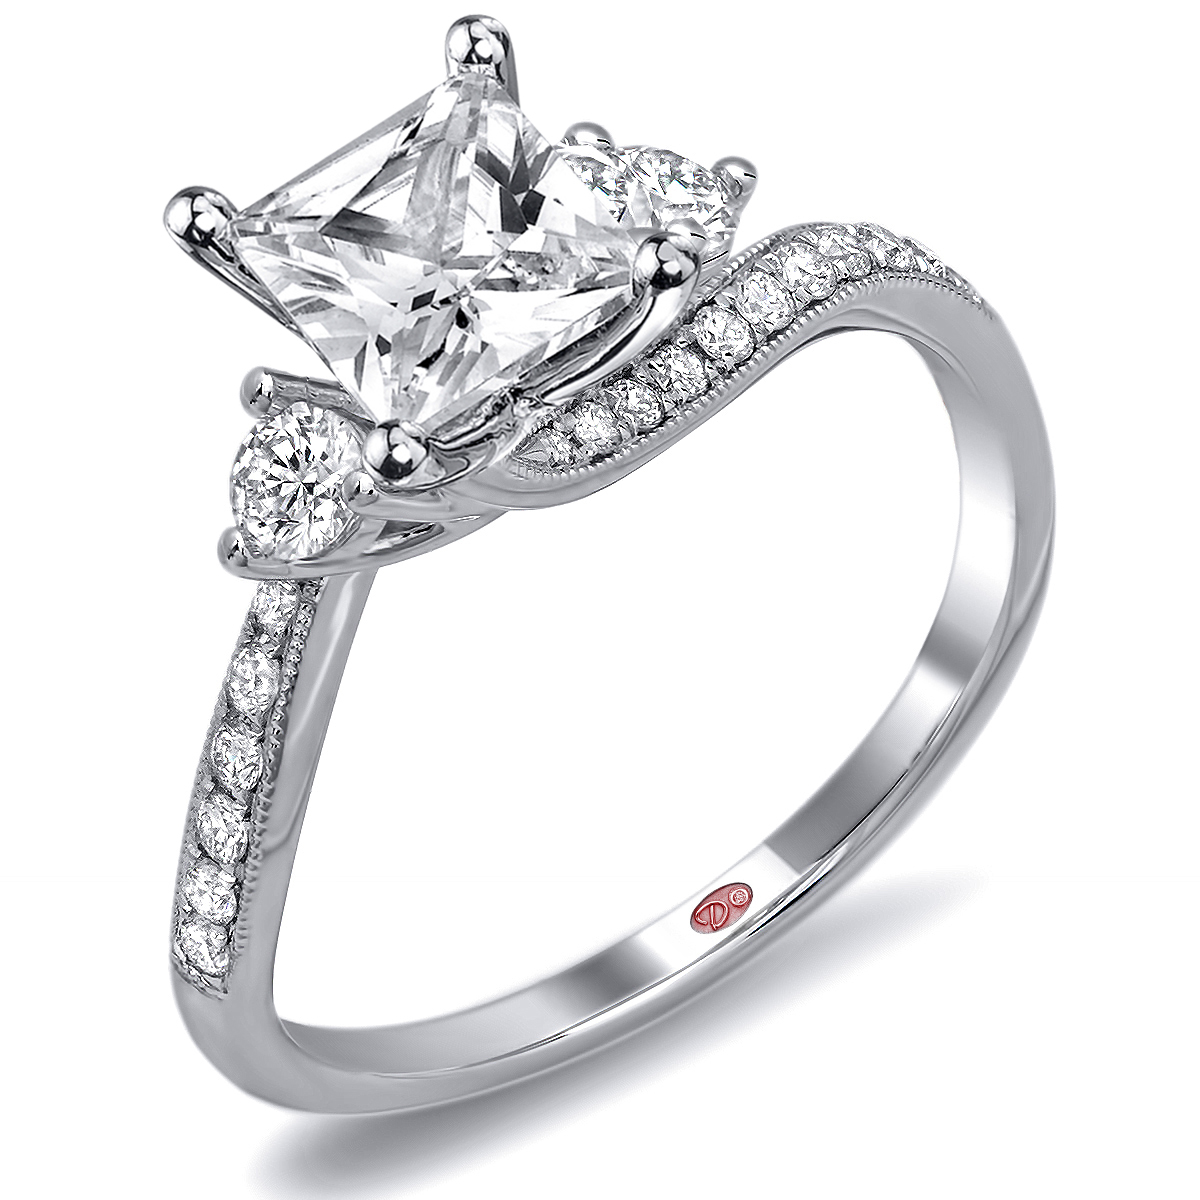 Designer Bridal Rings - DW6098